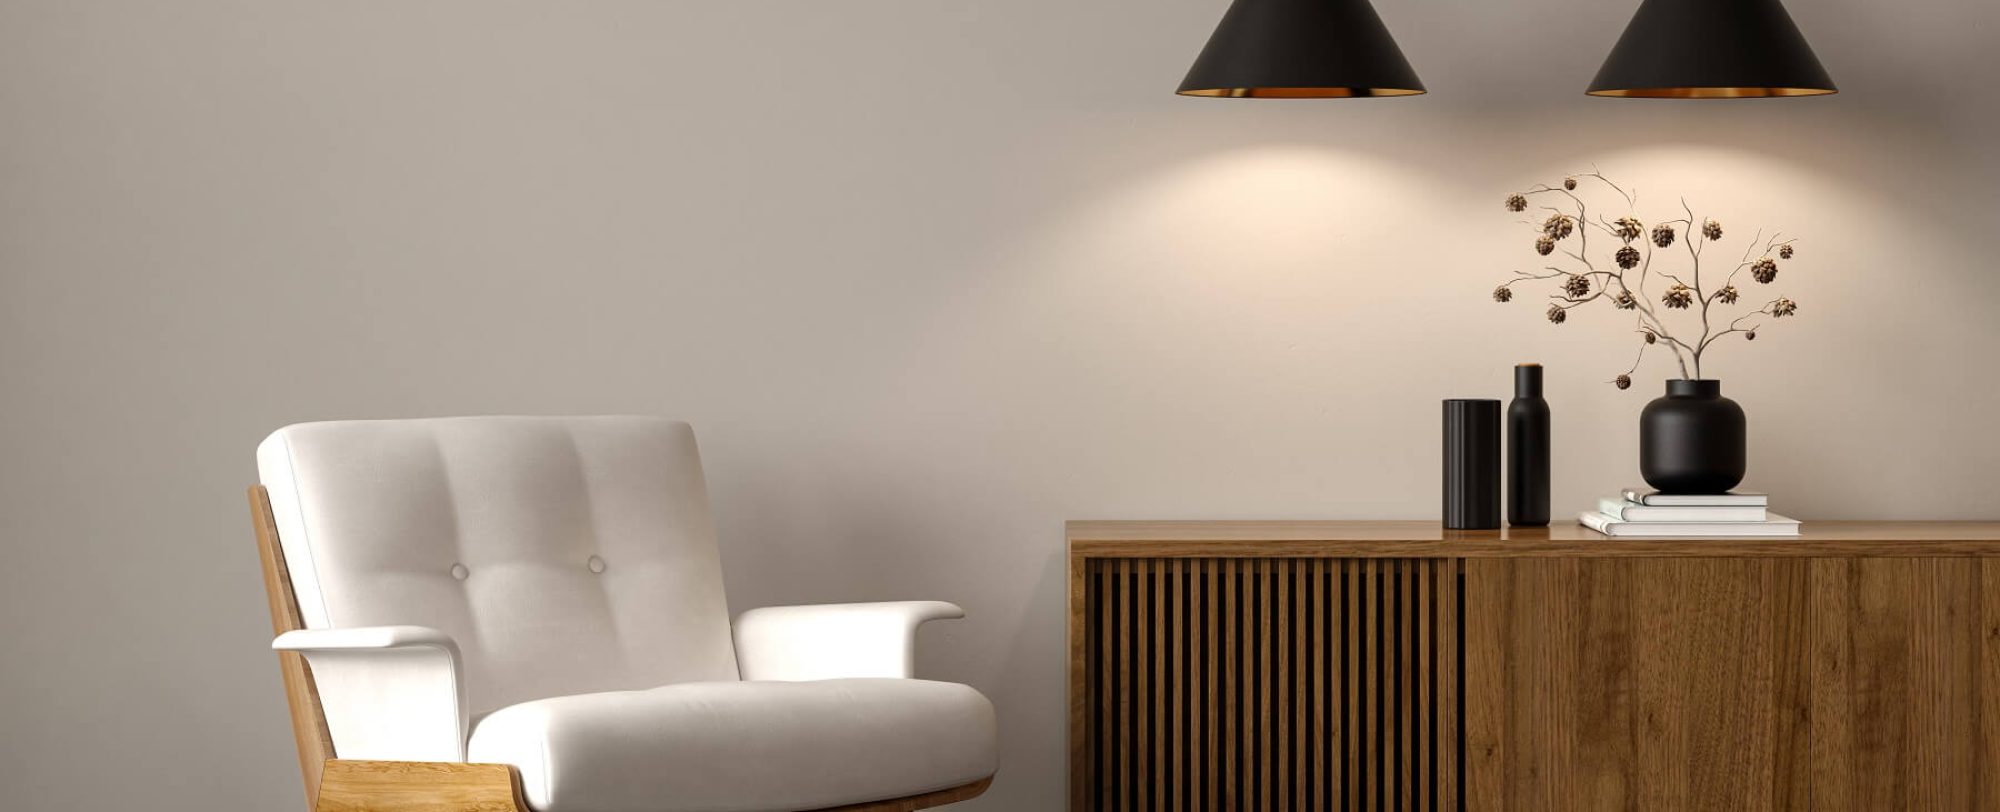 minimalist-interior-of-modern-living-room-3d-rende-23PQS3U.jpg